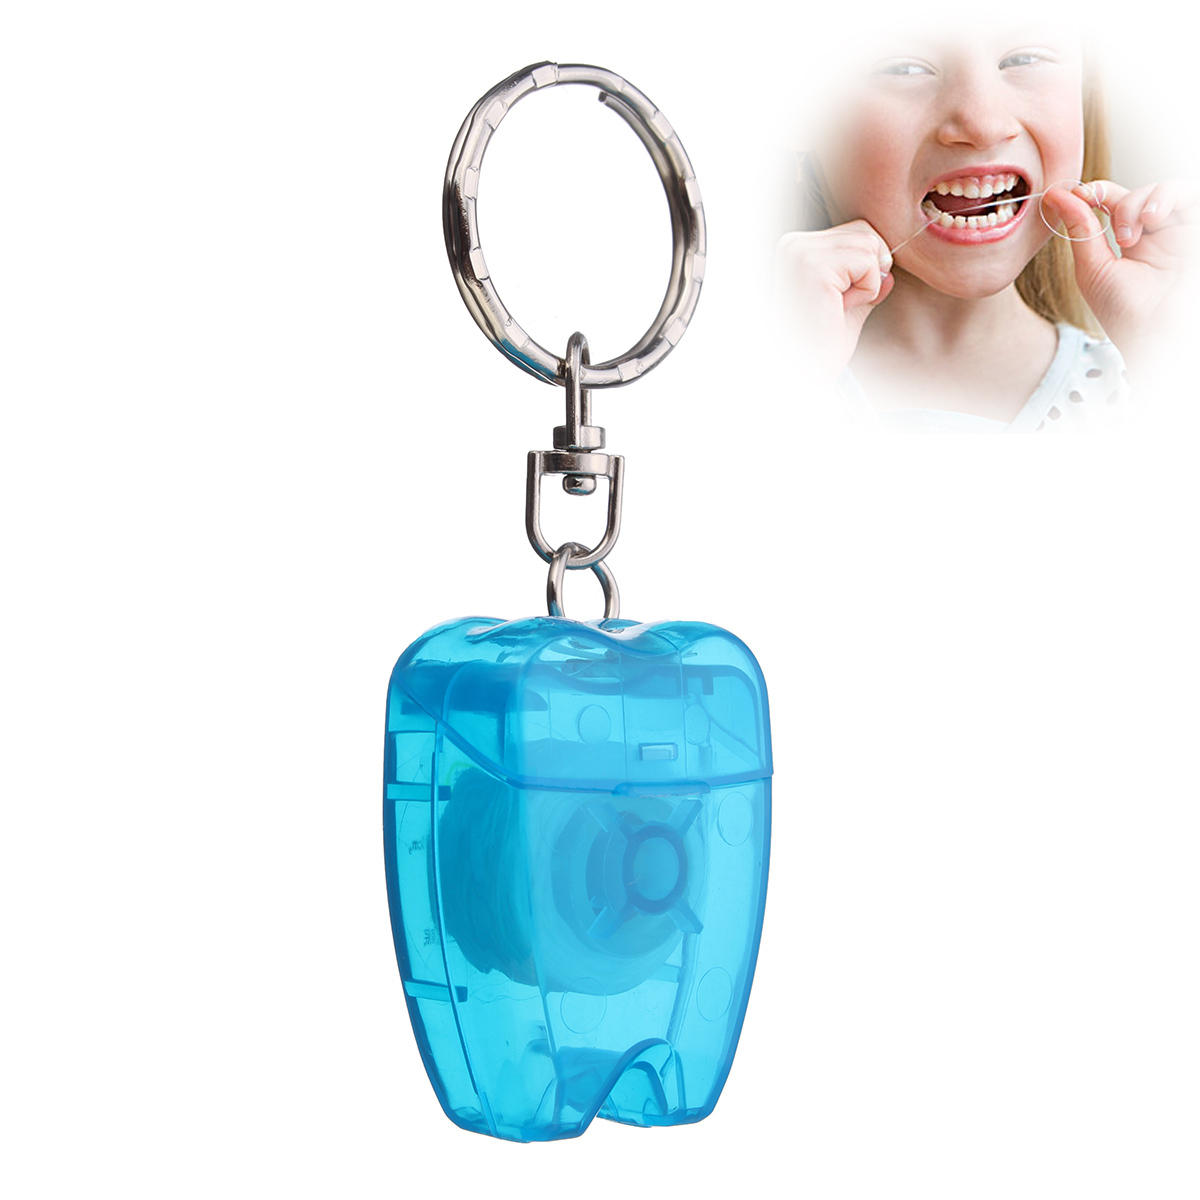 15m Mint Draagbare Sleutelhanger Dental Tandenvlossen Flossing Tanden Mondelinge Clean Gum Care Tool